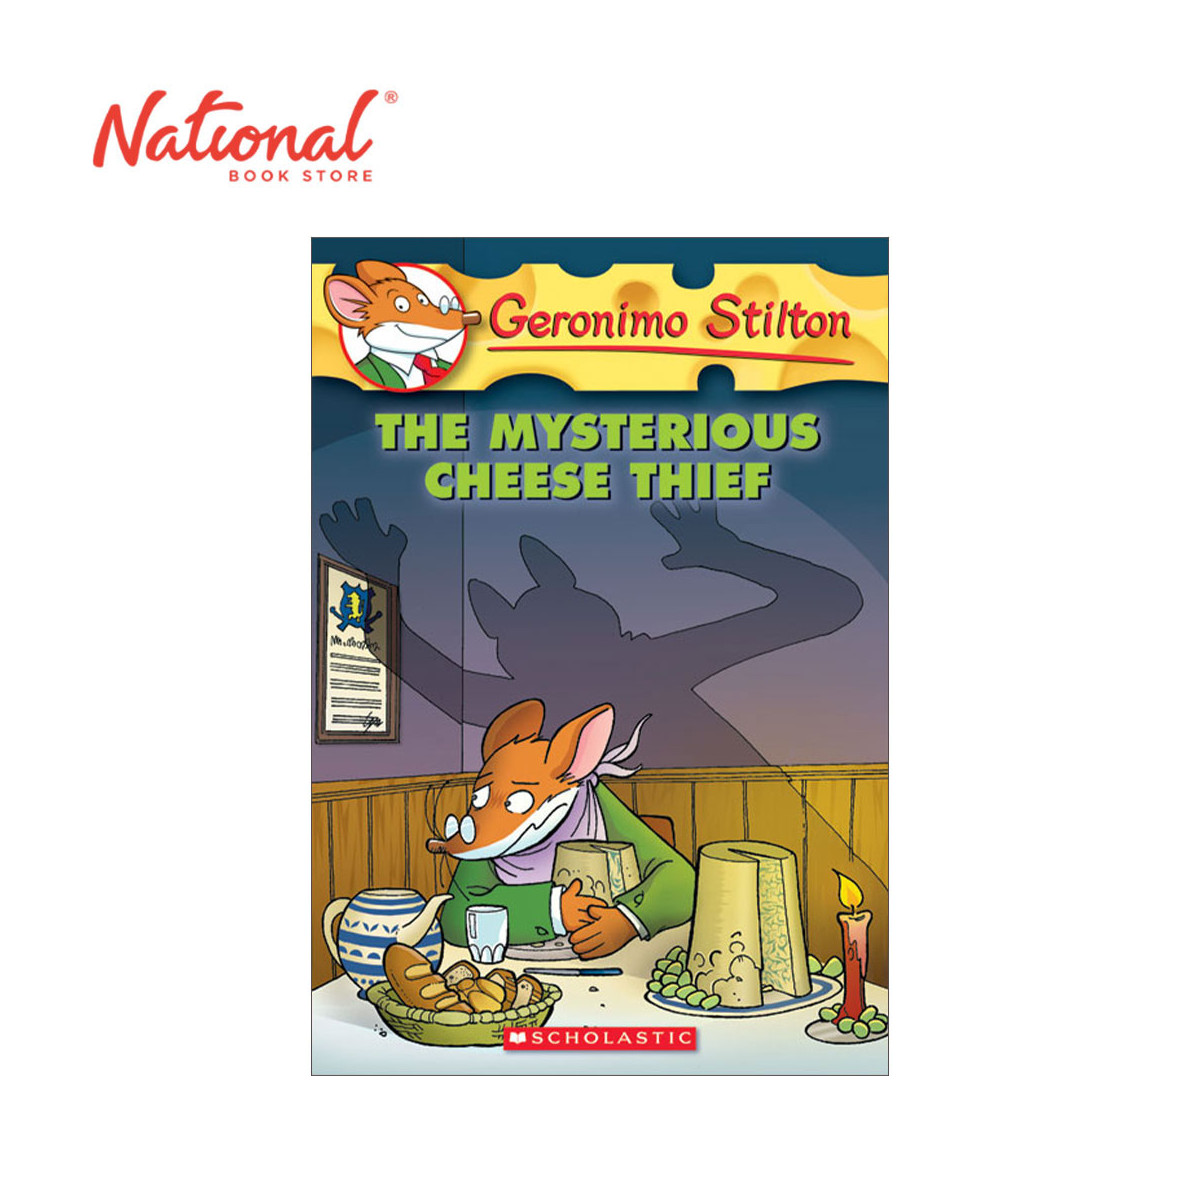 Geronimo Stilton 31C: The Mysterious Cheese Thief By Geronimo Stilton - Trade Paperback - Children's